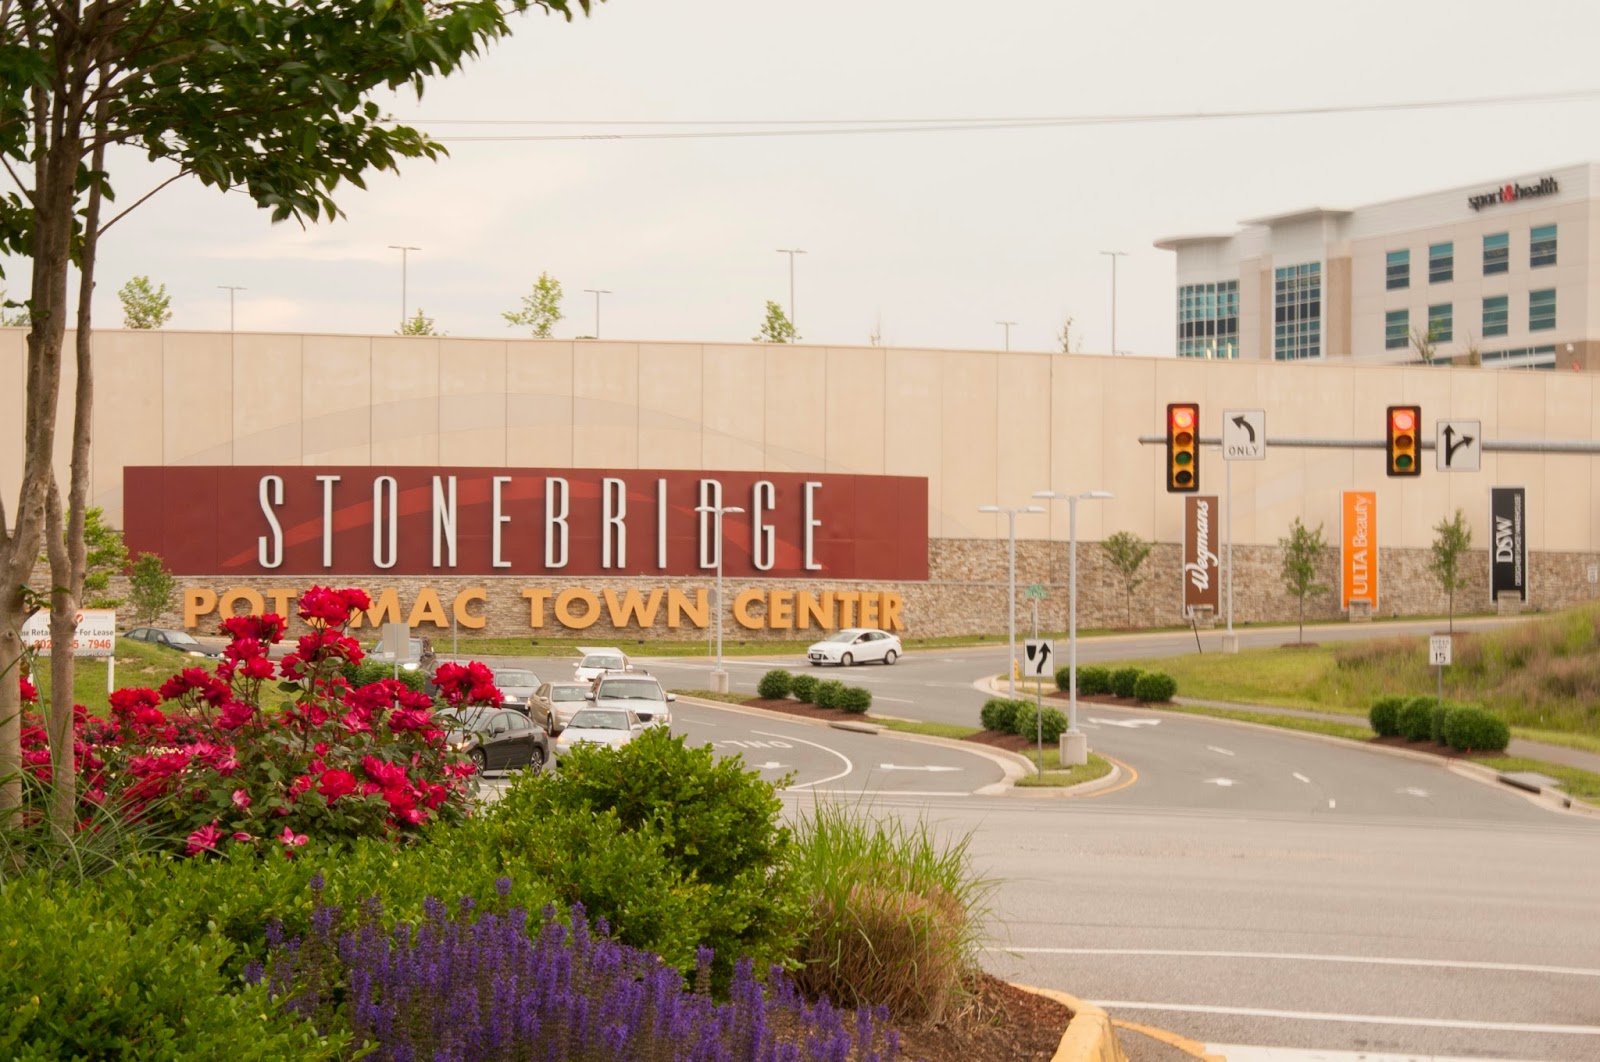 Stonebridge Potomac Town Center Woodbridge VA